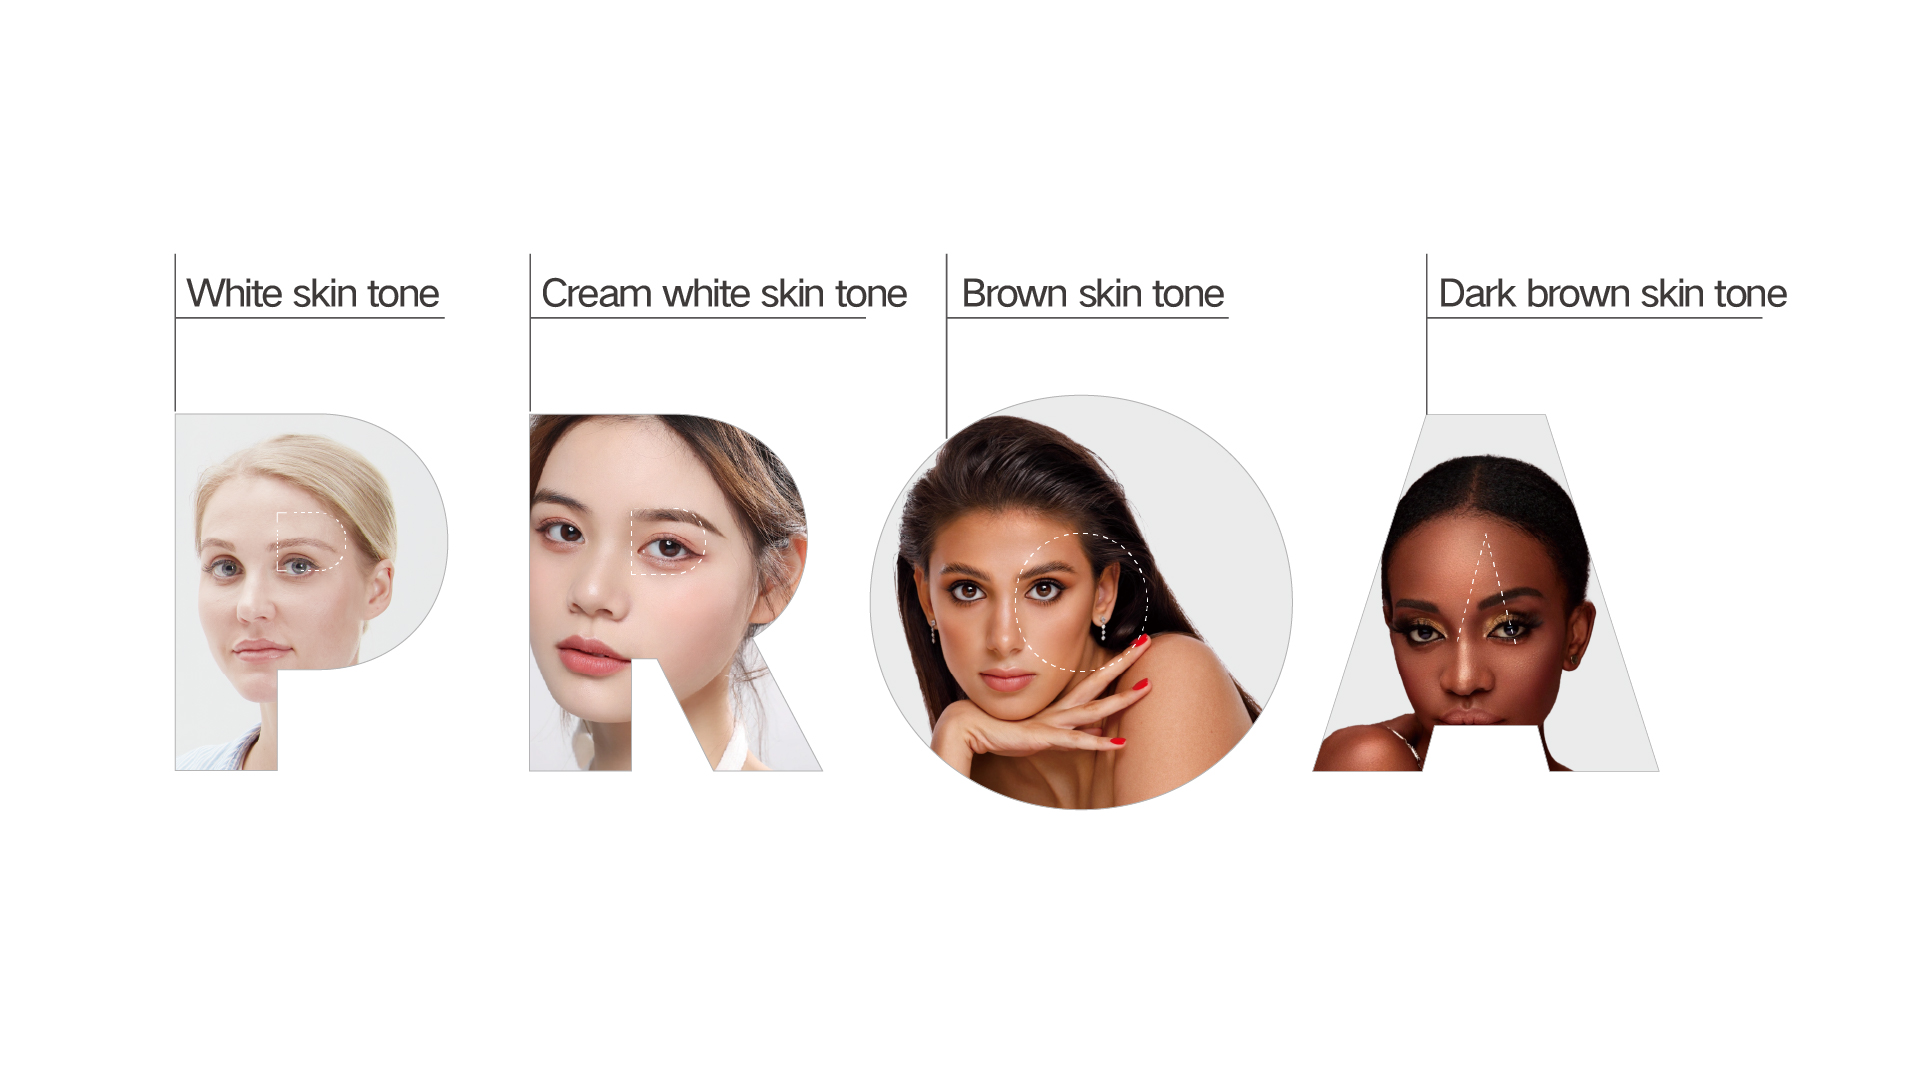 Targeting different skin tones 